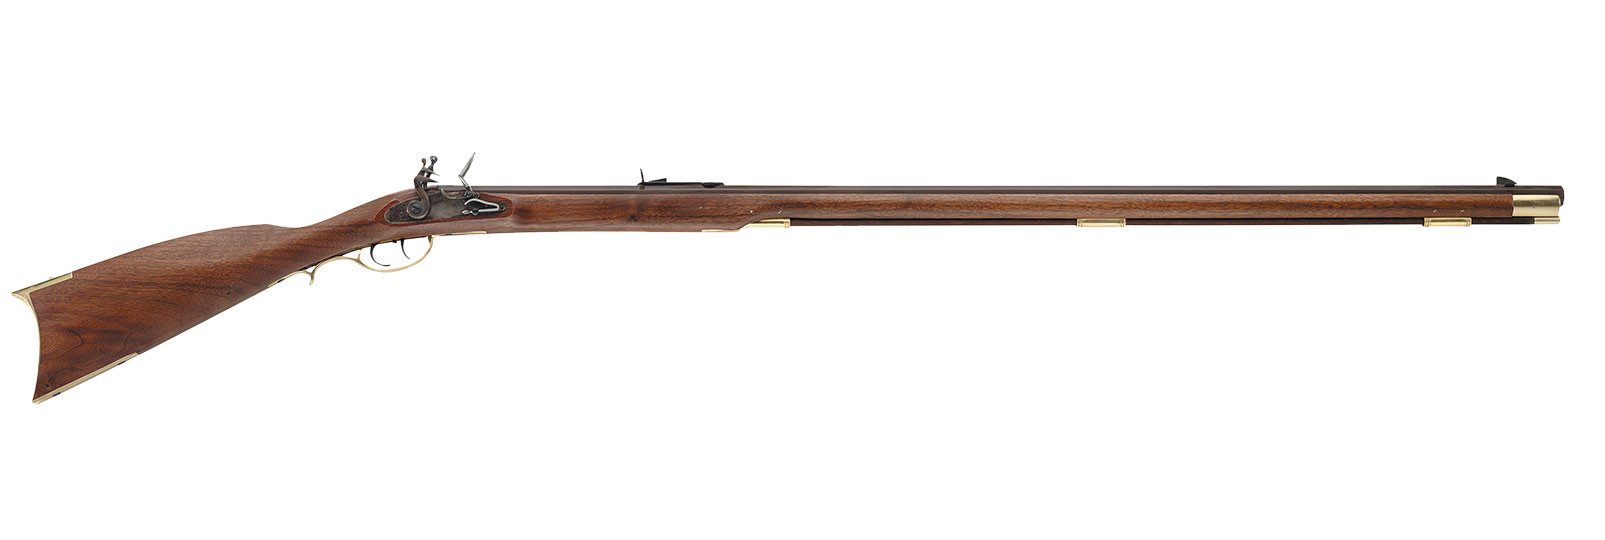 Pennsylvania Rifle flintlock model